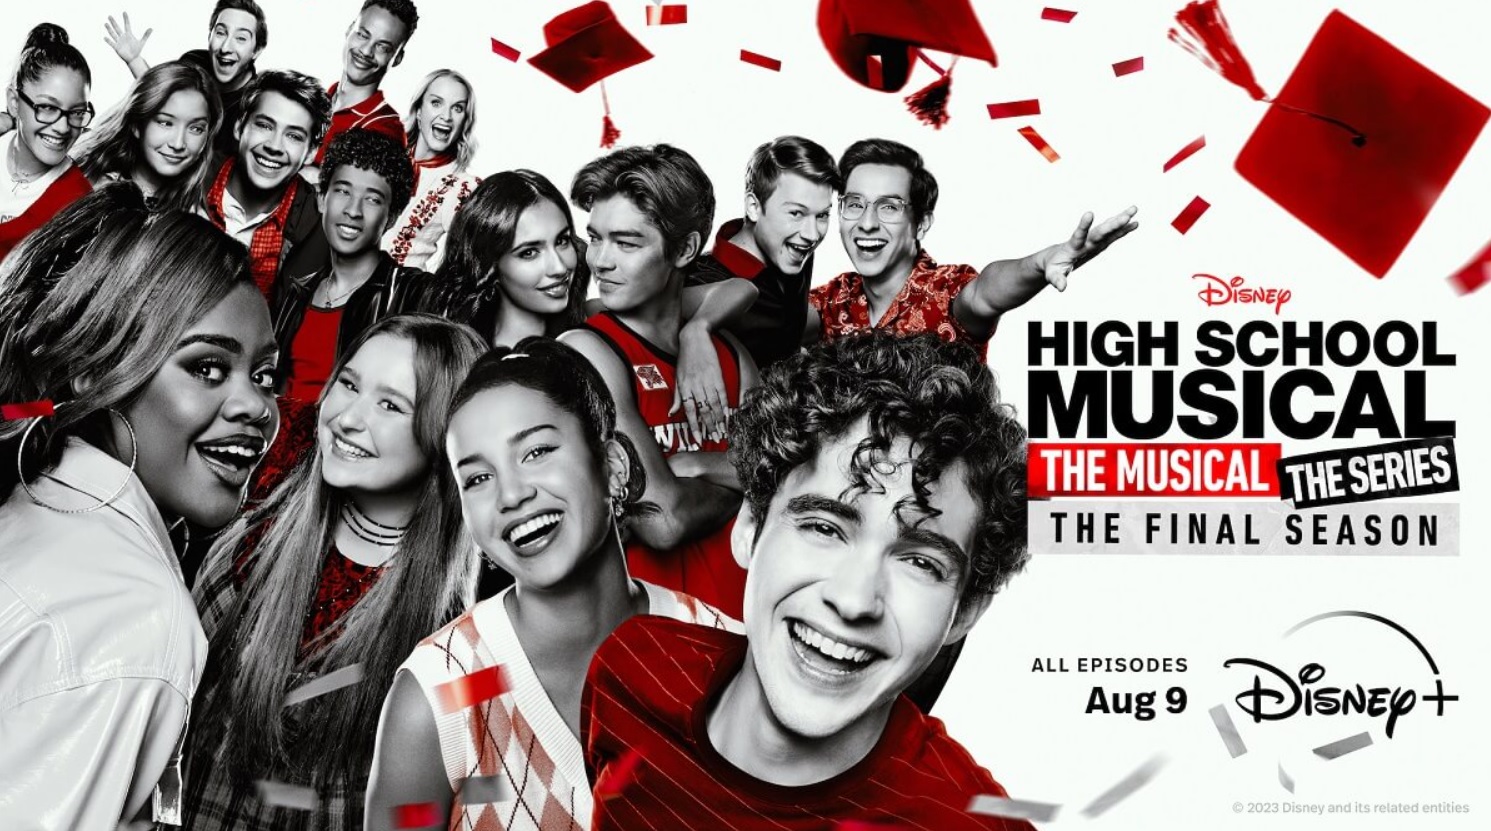 High School Musical: The Musical: The Series 4 estreno Disney+